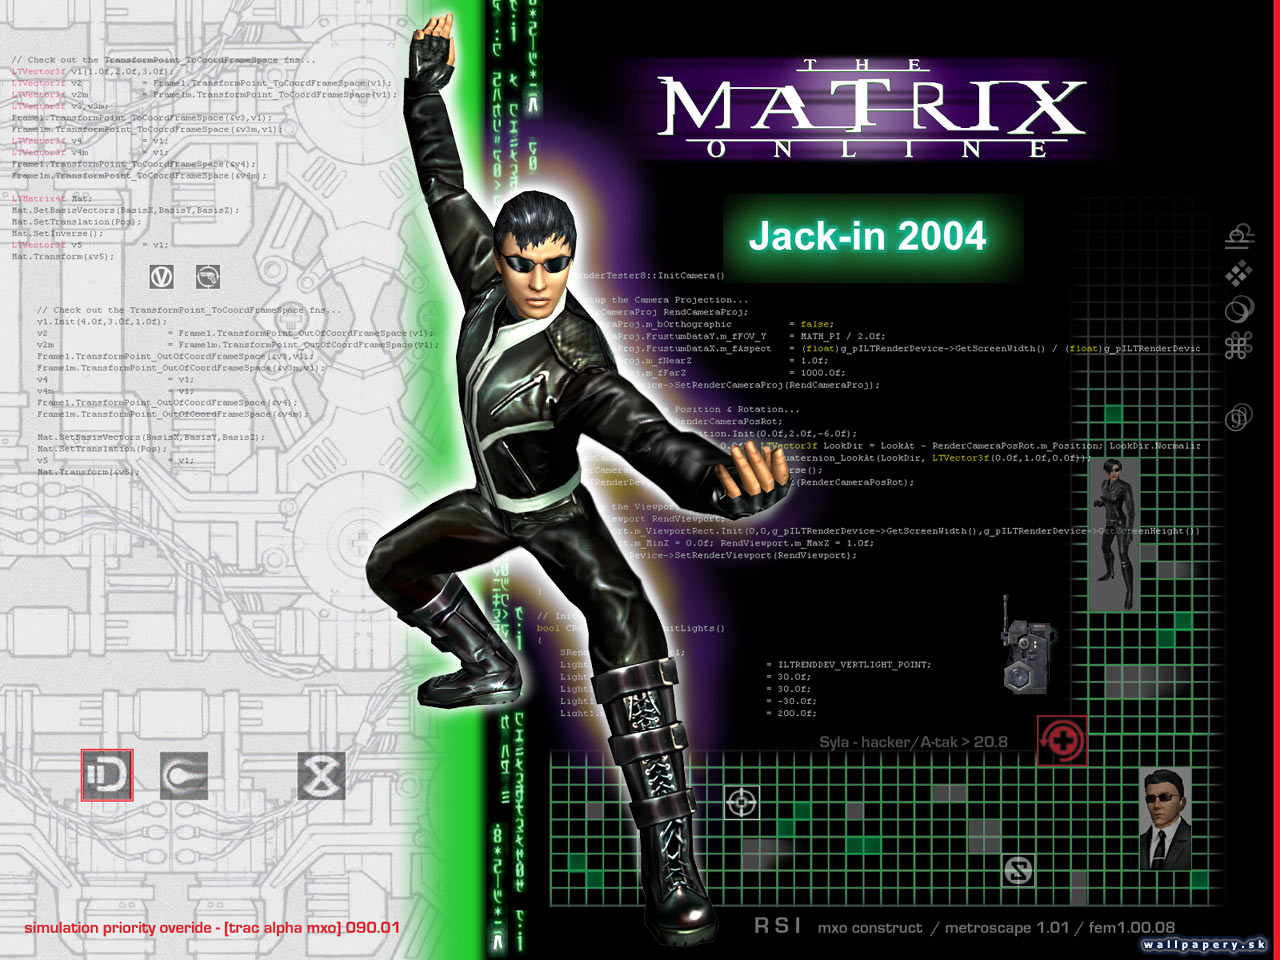 The Matrix Online - wallpaper 7